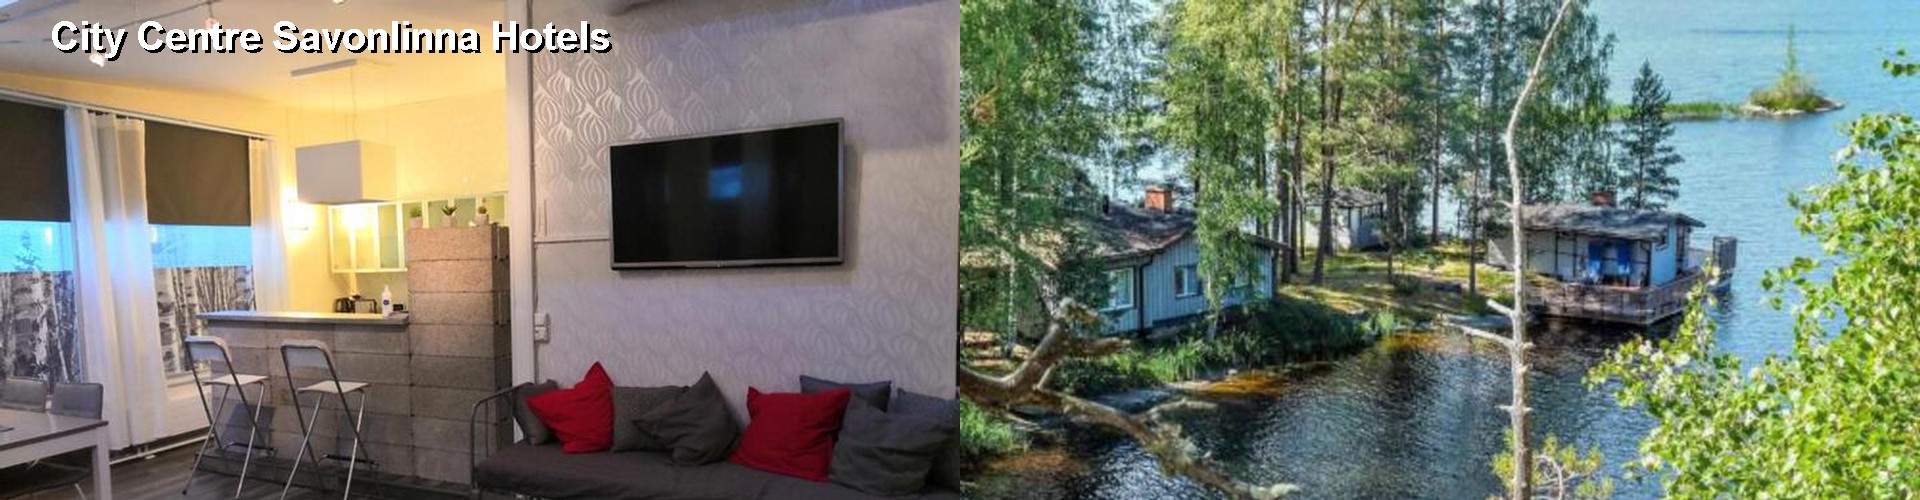 3 Best Hotels near City Centre Savonlinna